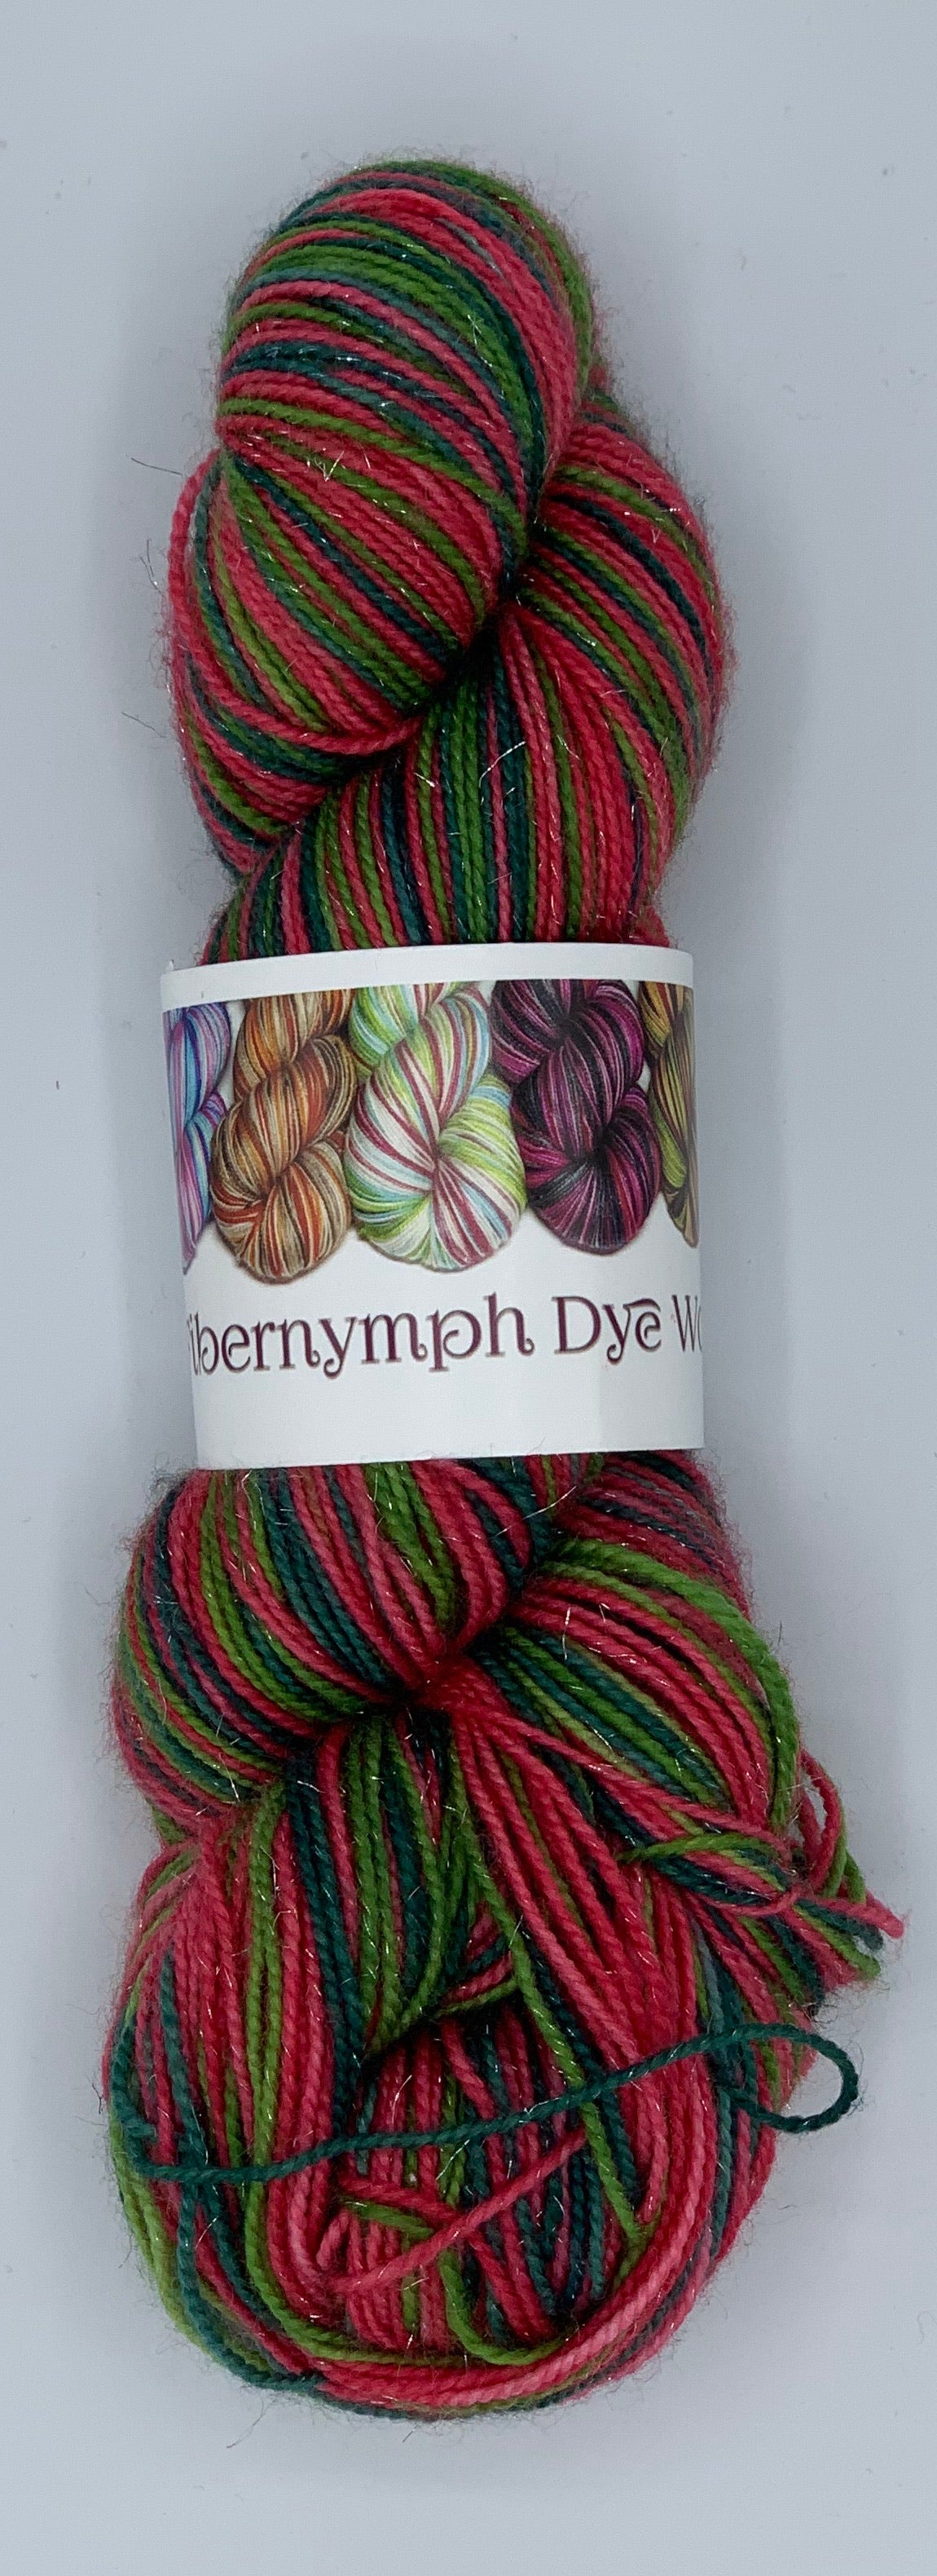 Fibernymph Dye Works Bedazzled